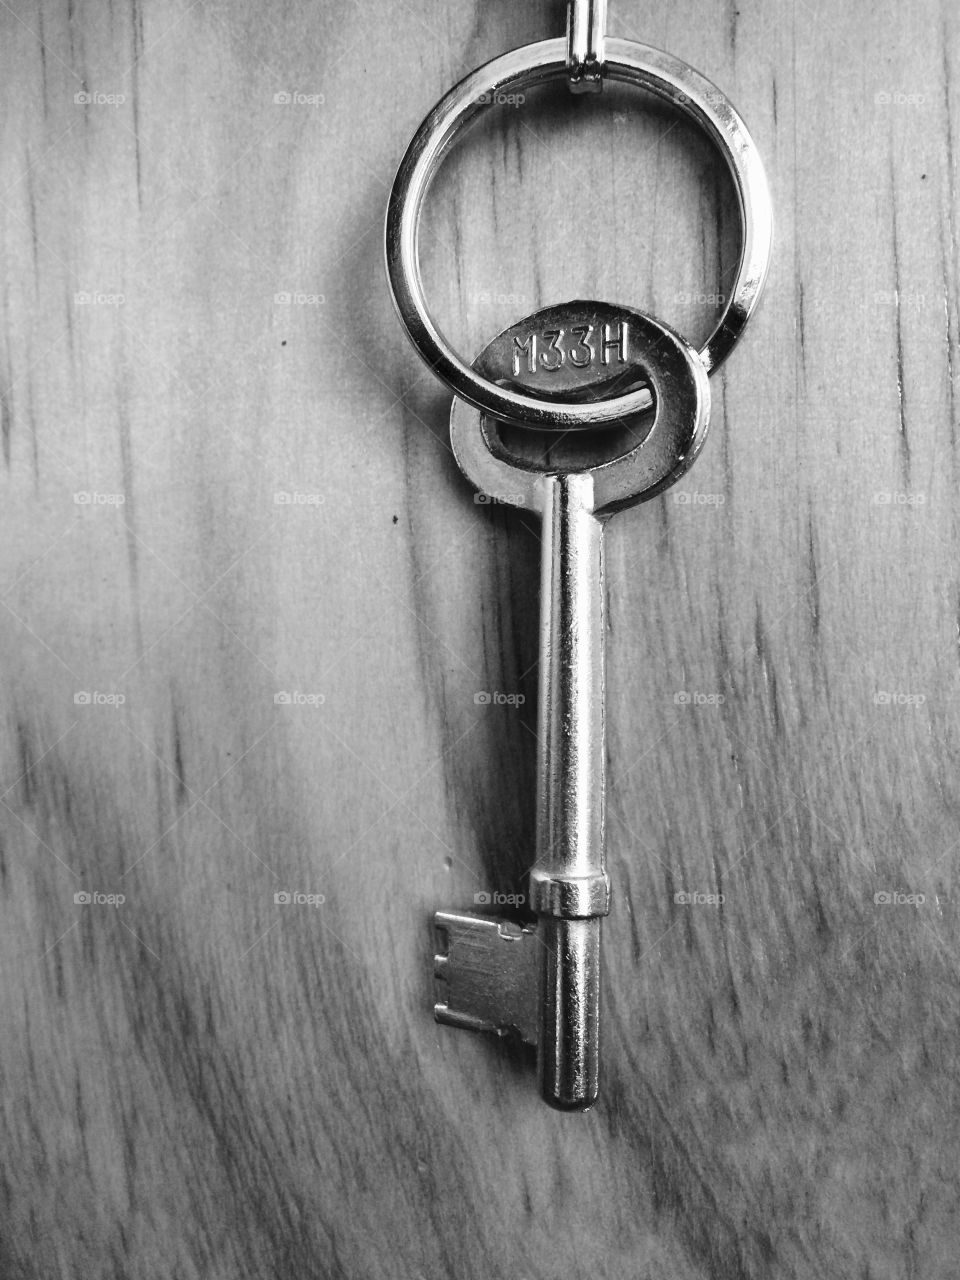 The key 